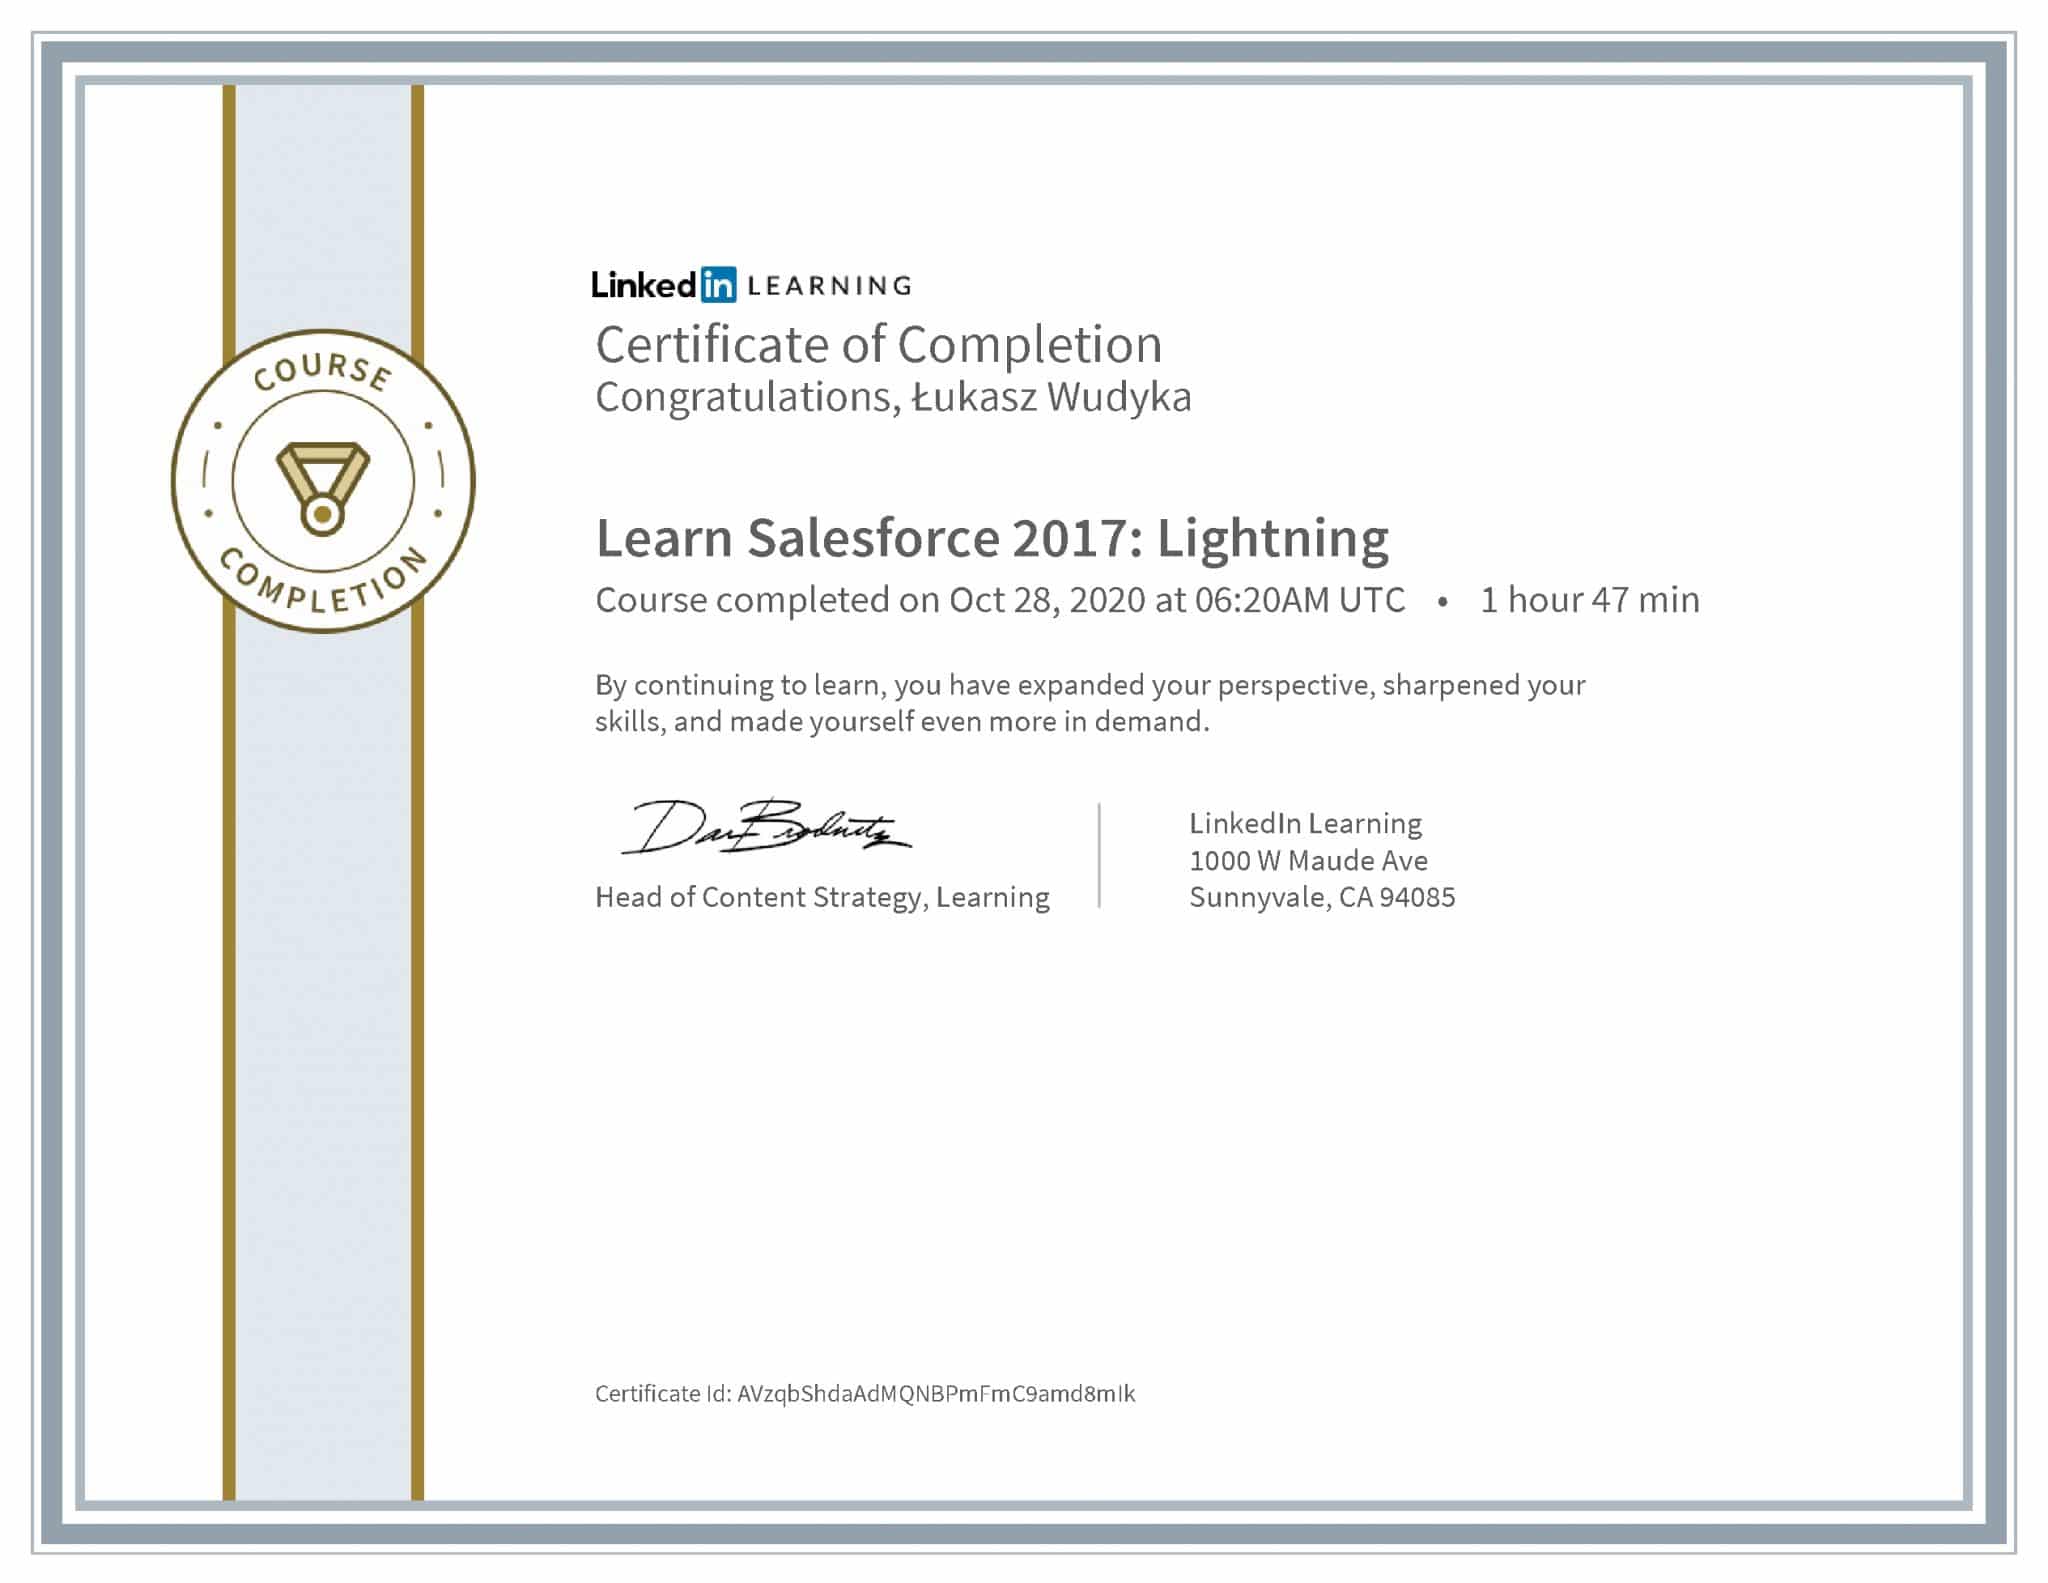 Łukasz Wudyka certyfikat LinkedIn Learn Salesforce 2017: Lightning